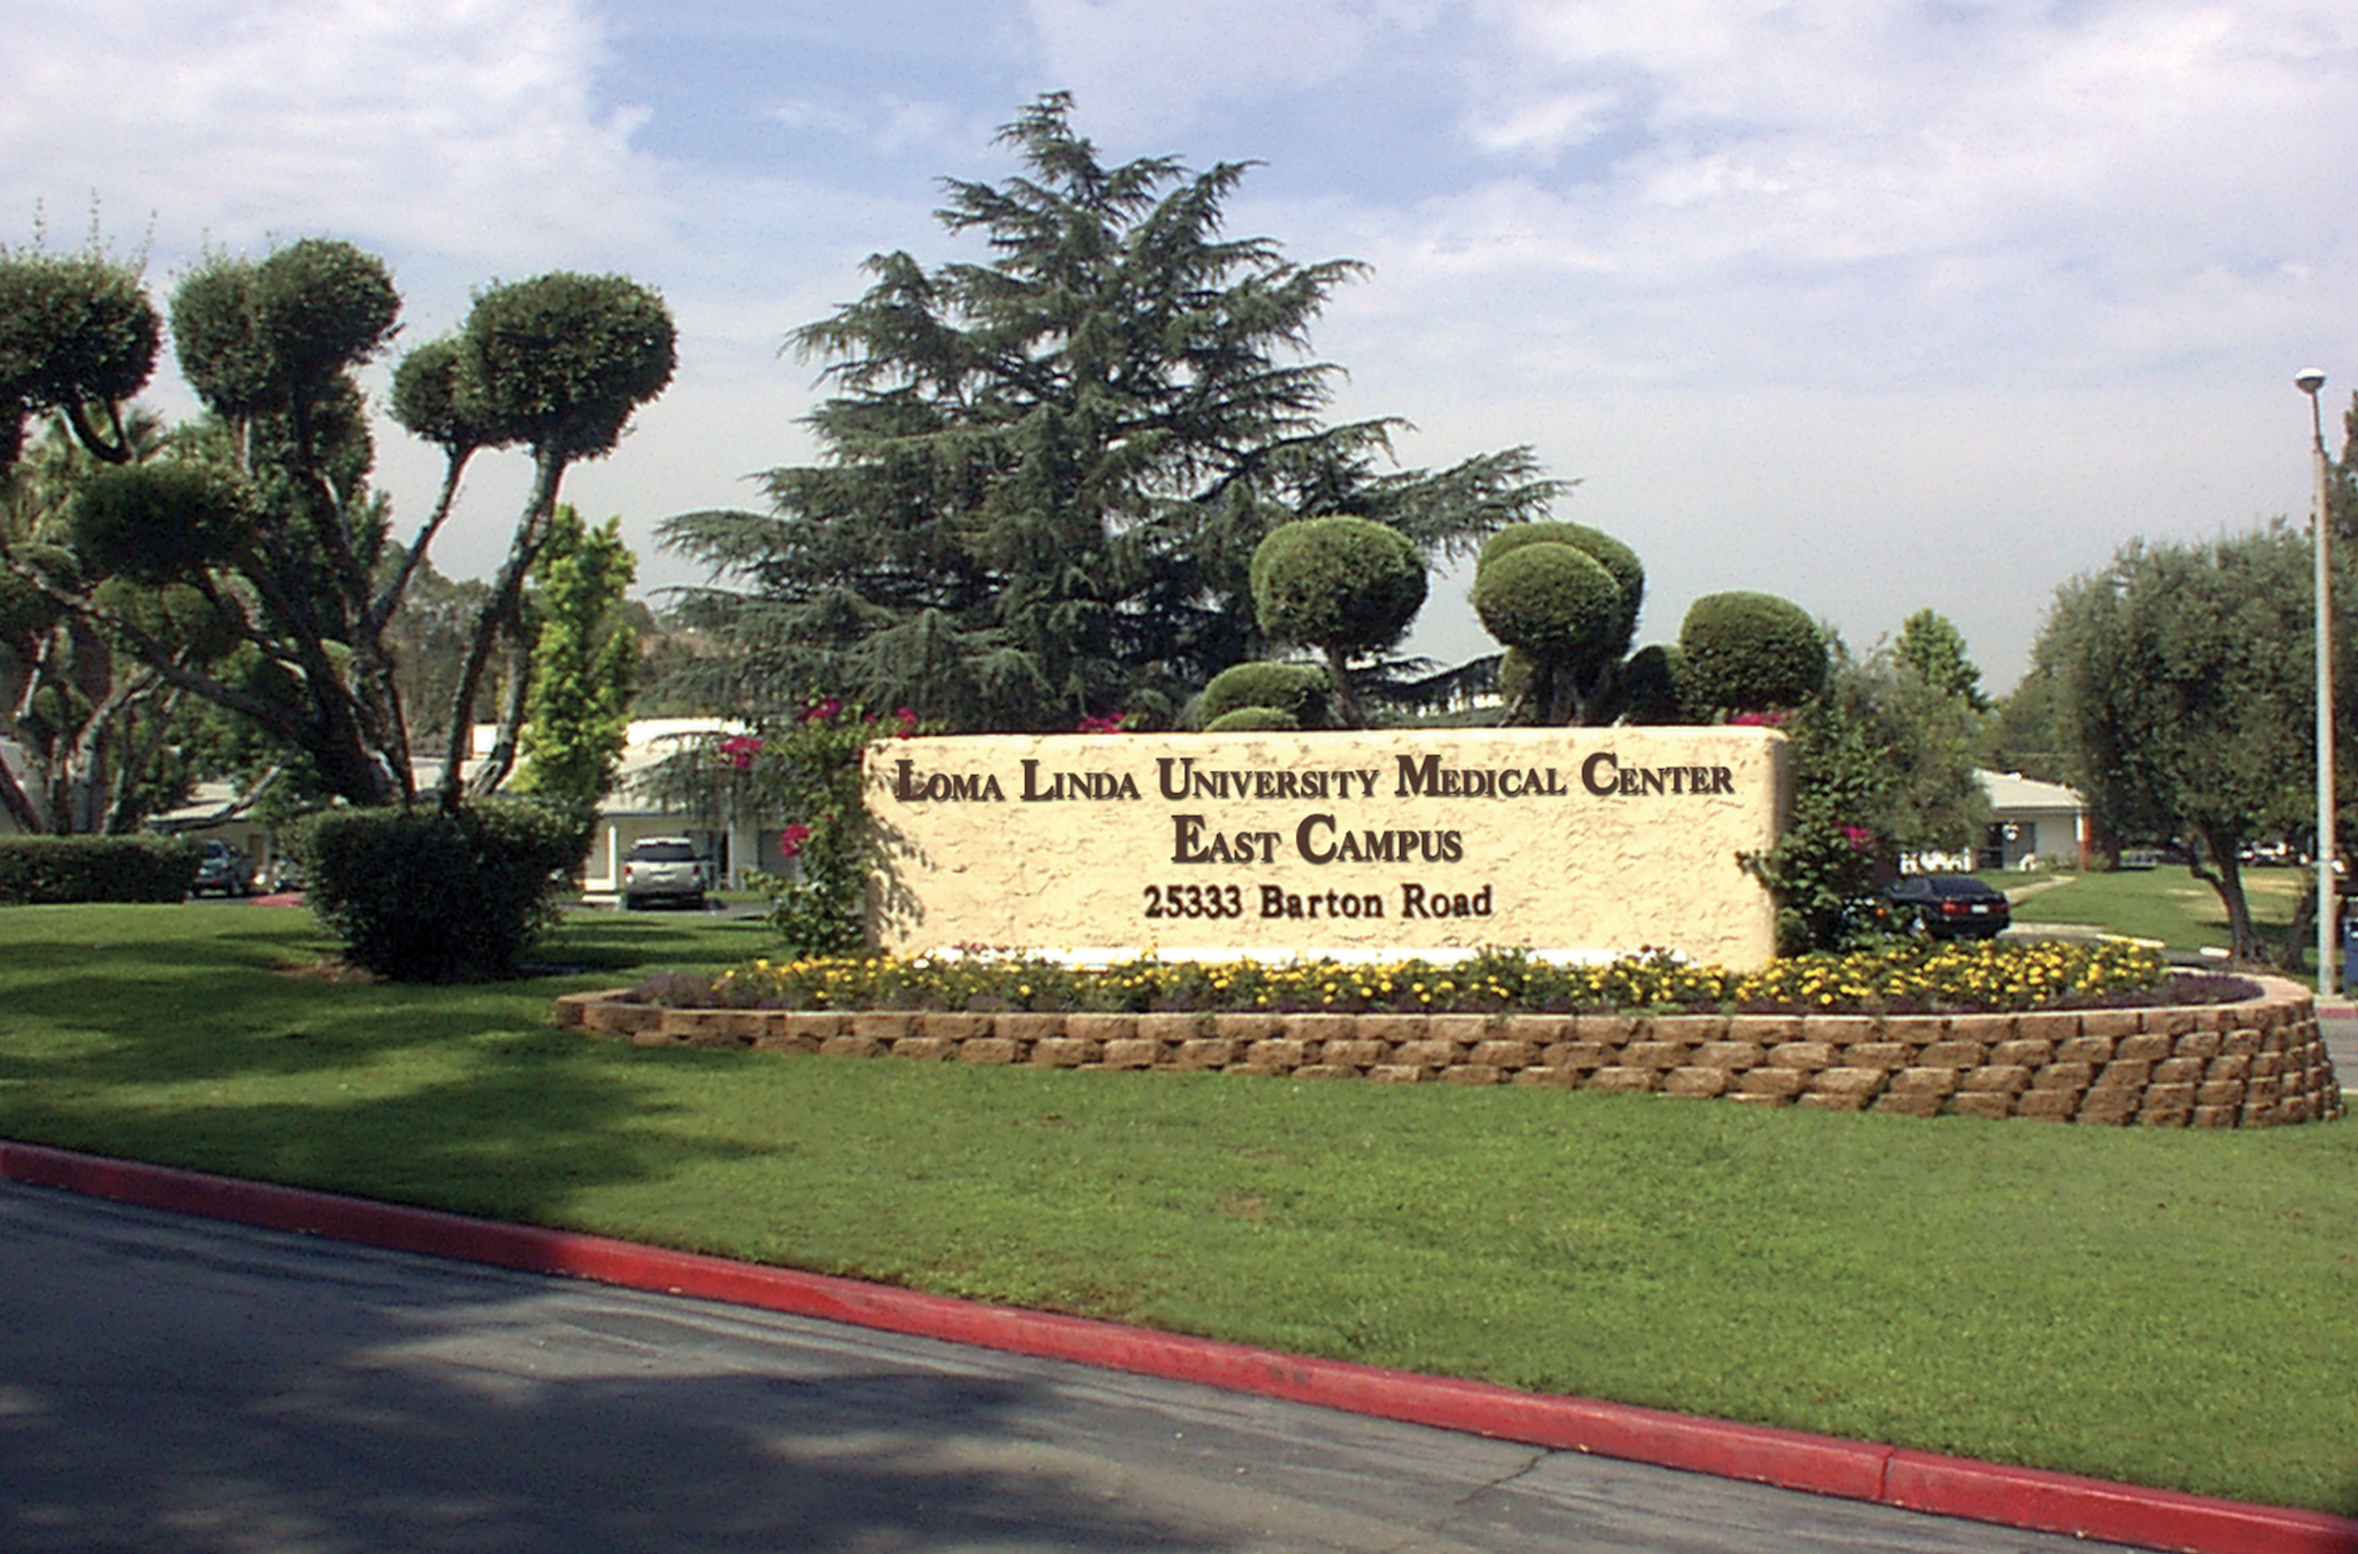 Loma Linda University Medical Center East Campus